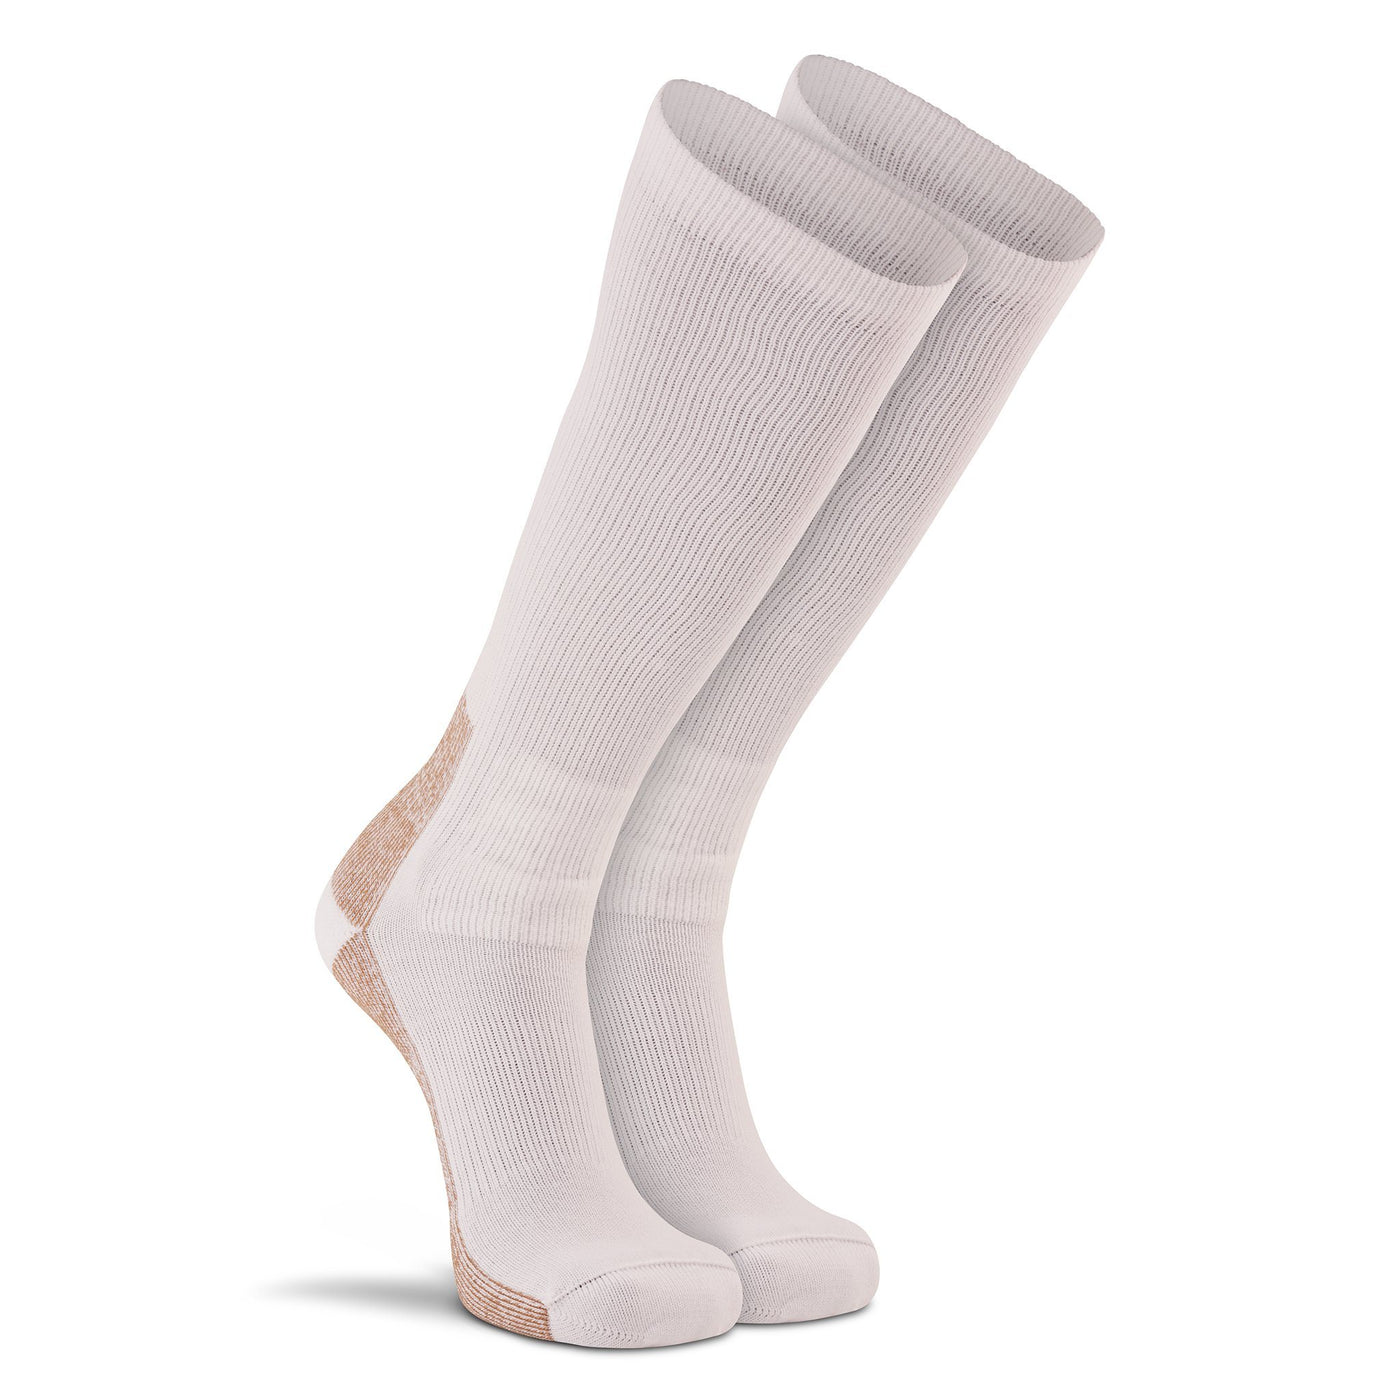 Westerner Medium Weight Over-the-Calf - 2 Pack White Medium - Fox River® Socks